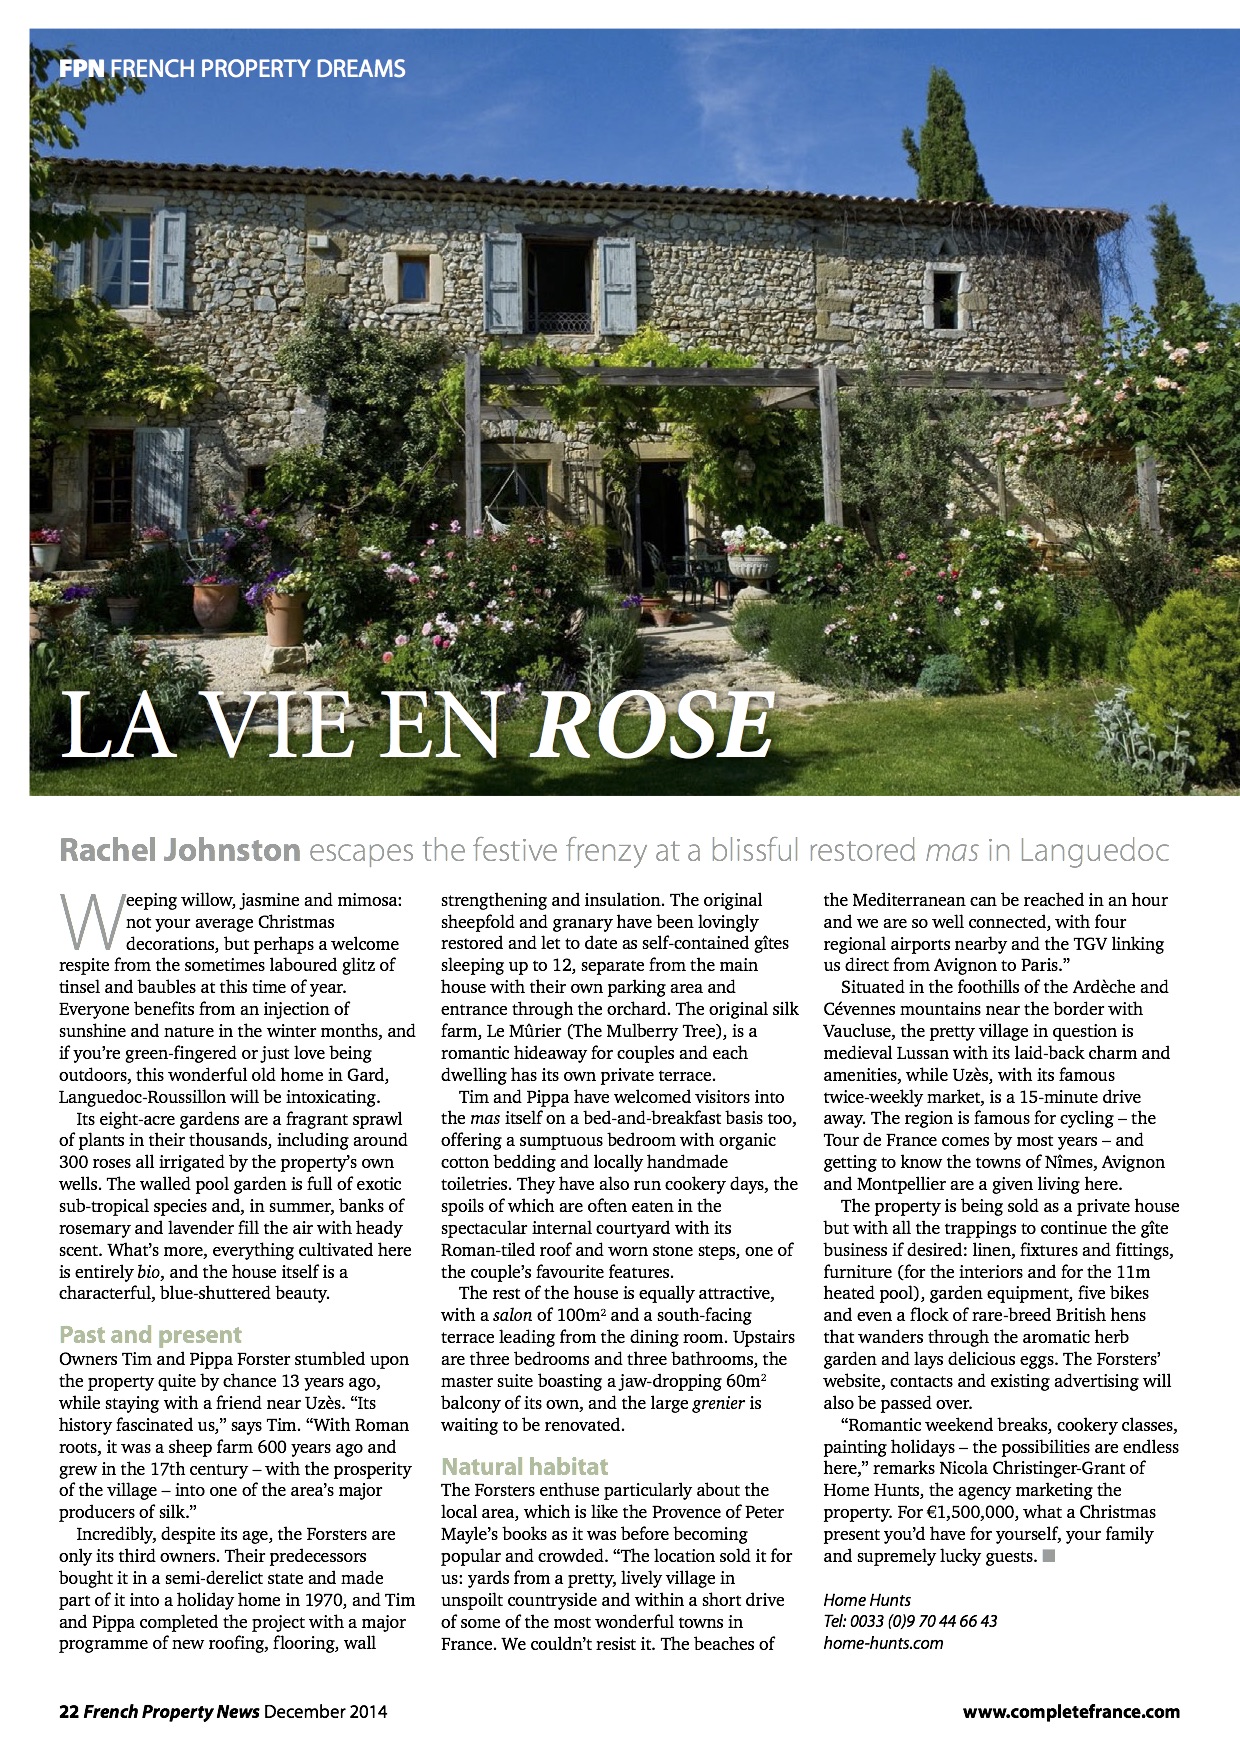 French Property News – Stunning Langeudoc Property